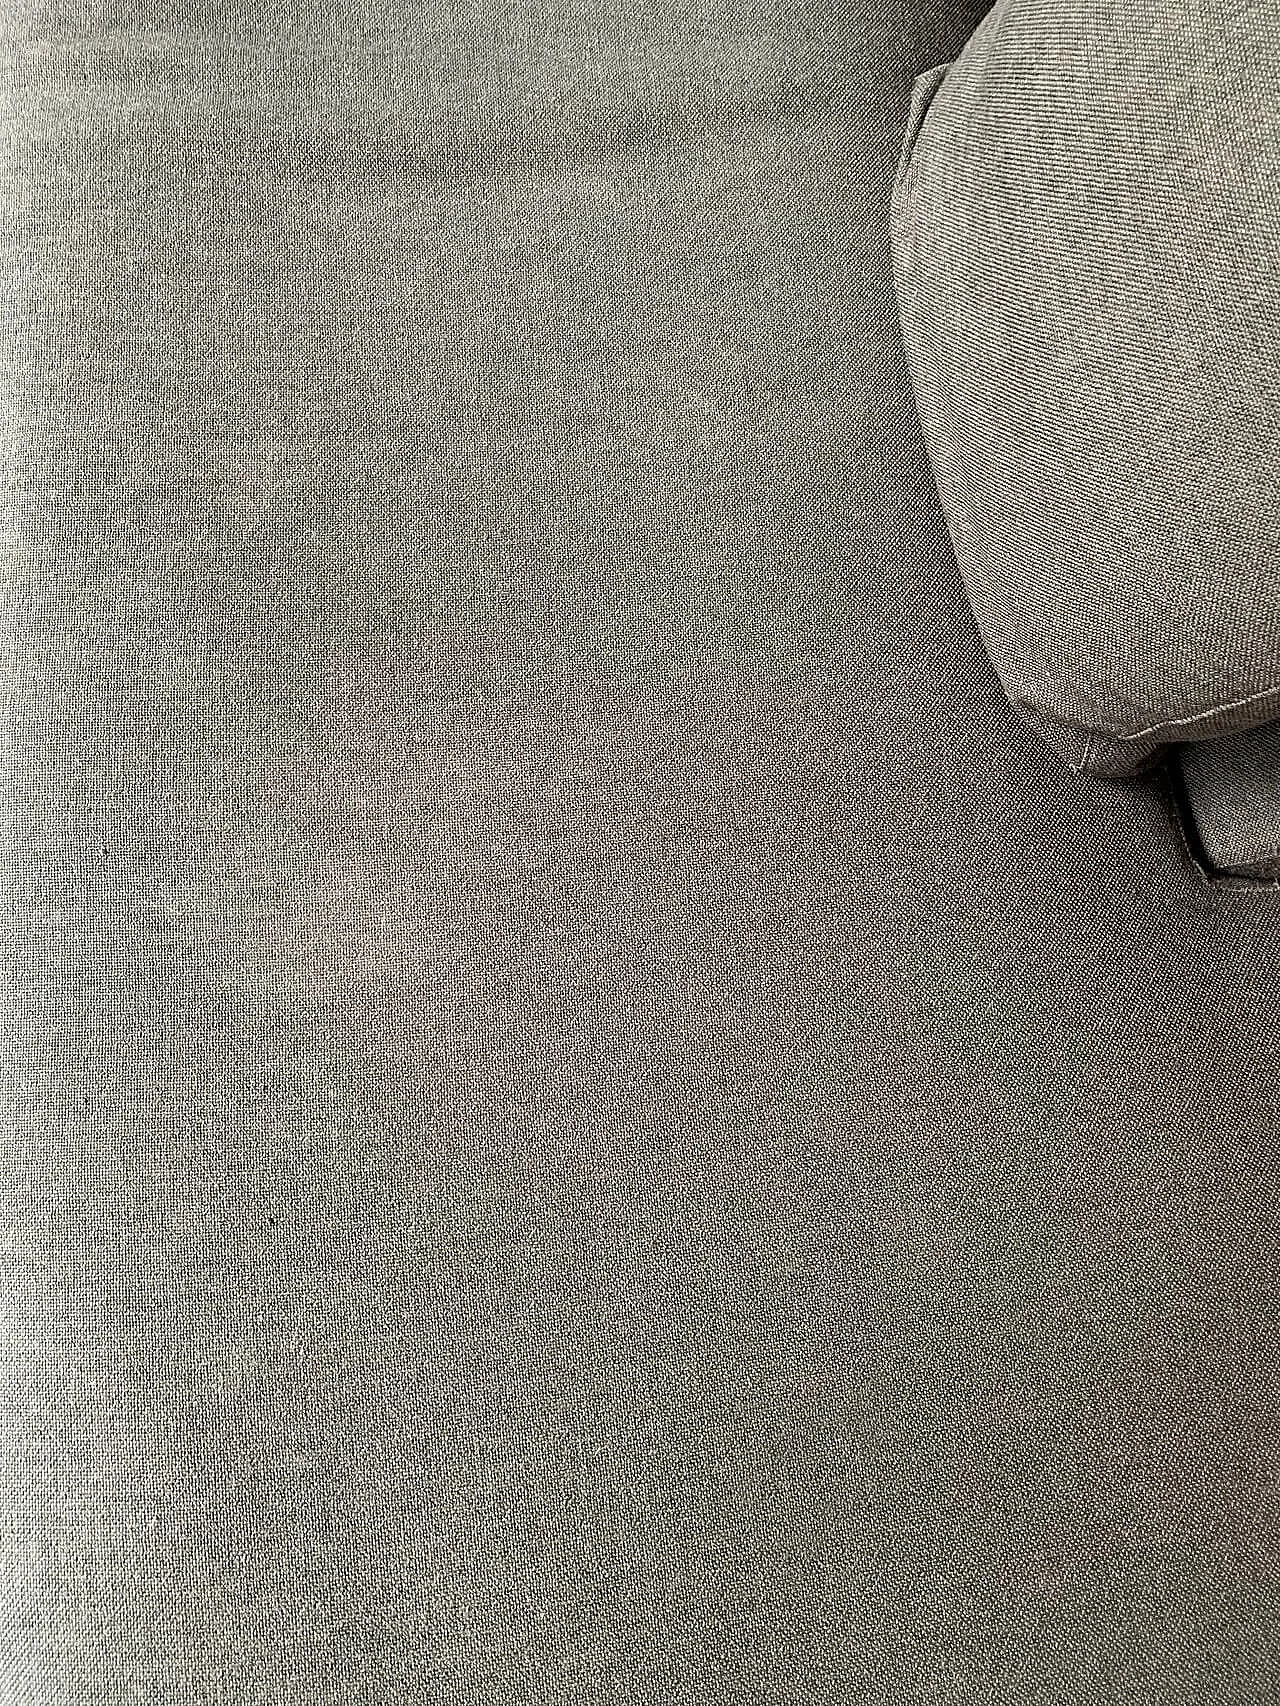 Cobalt gray Charles sofa by Antonio Citterio for B&B 4